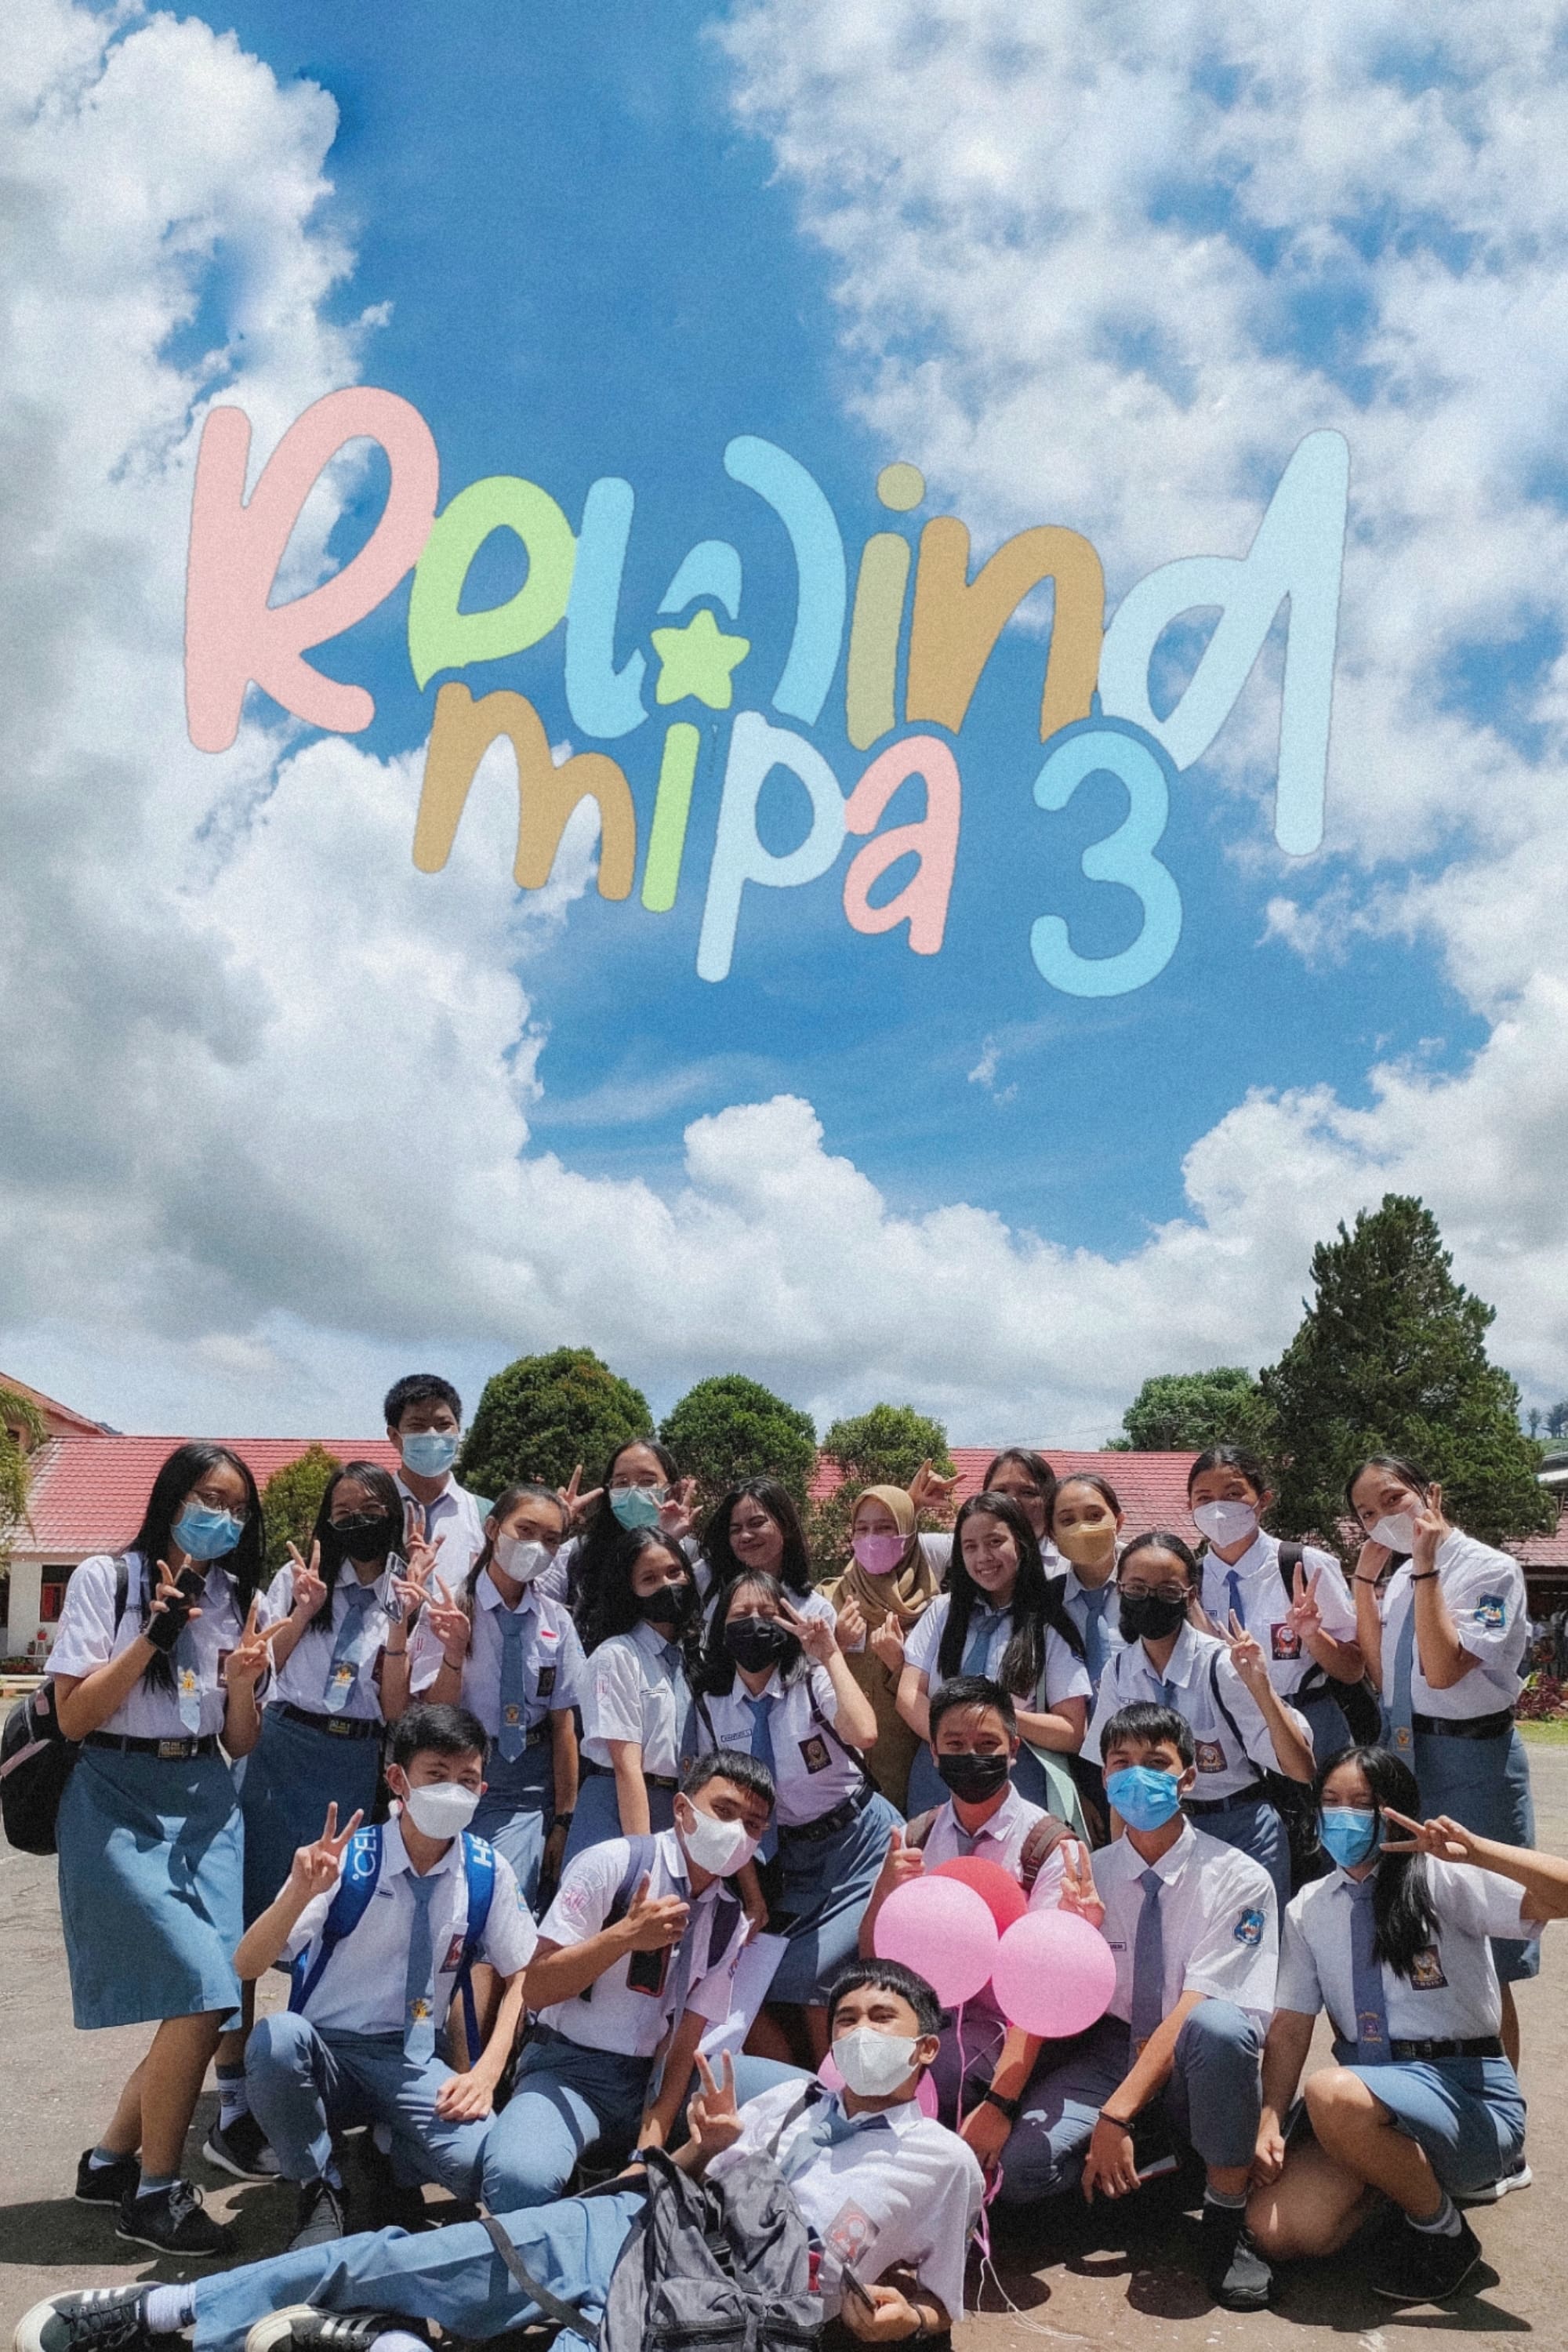 Rewind MIPA 3